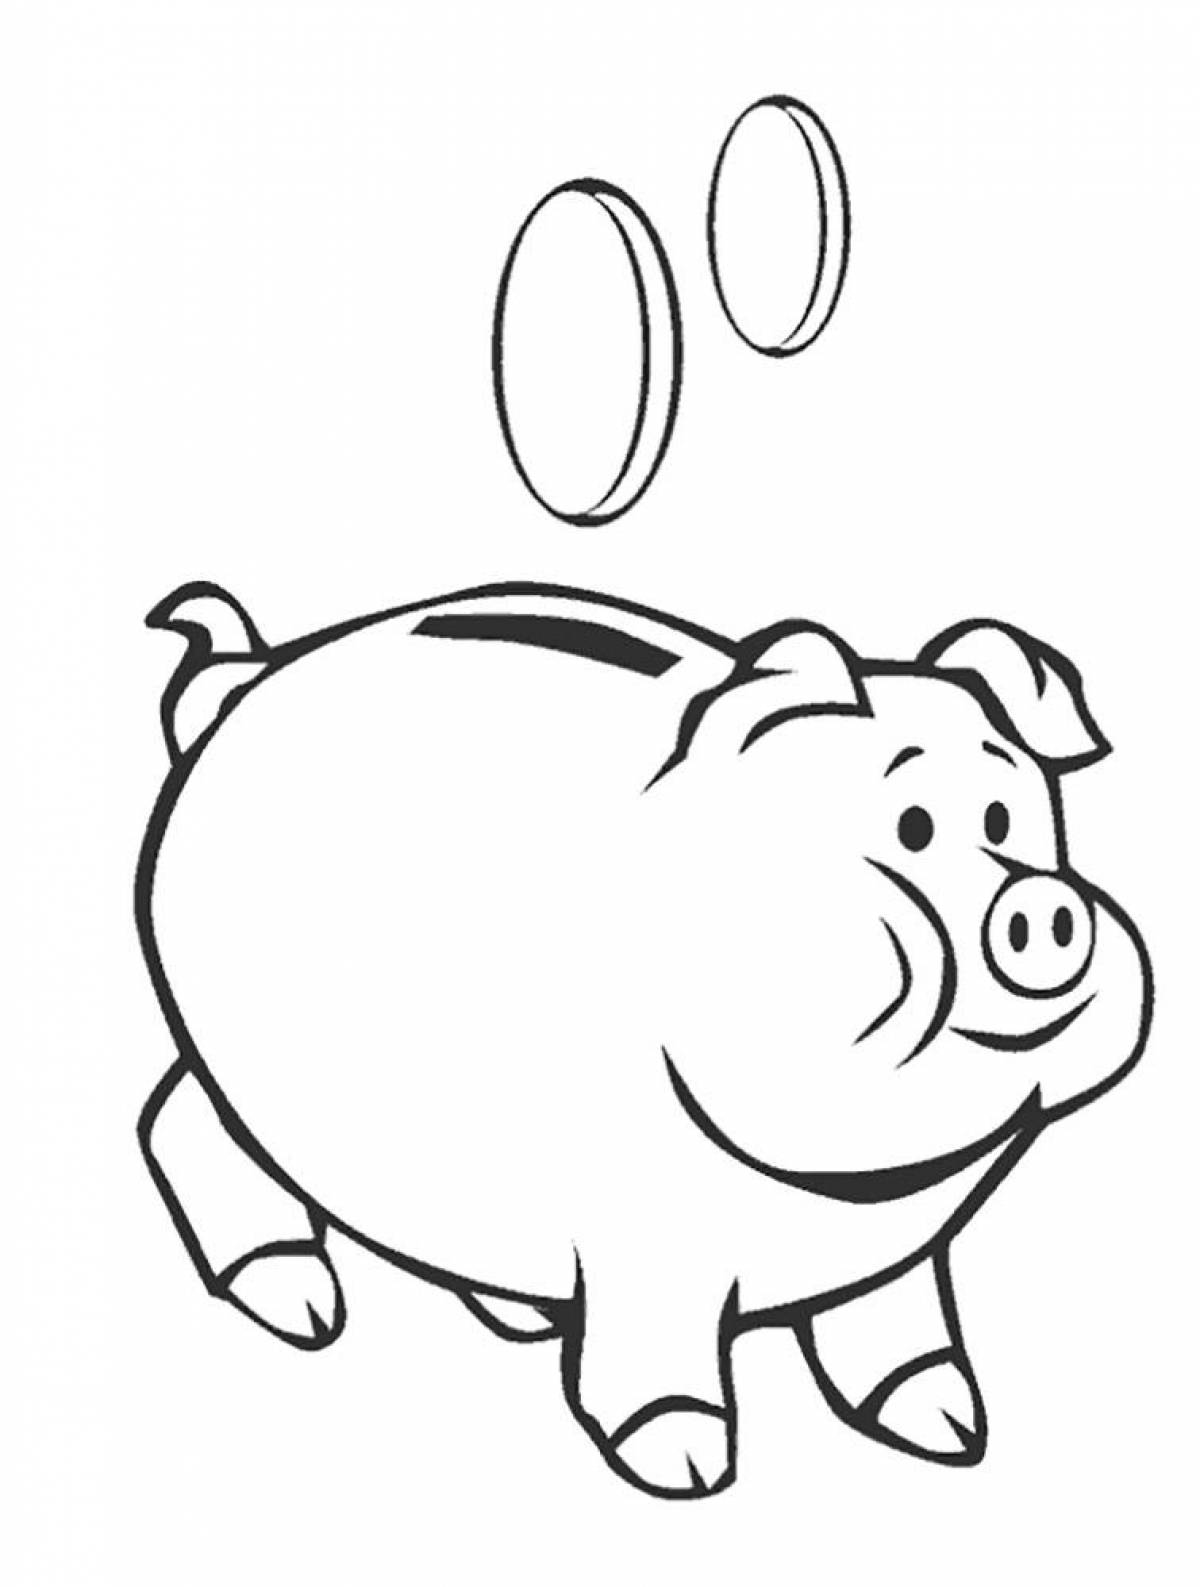 Adorable piggy bank coloring page